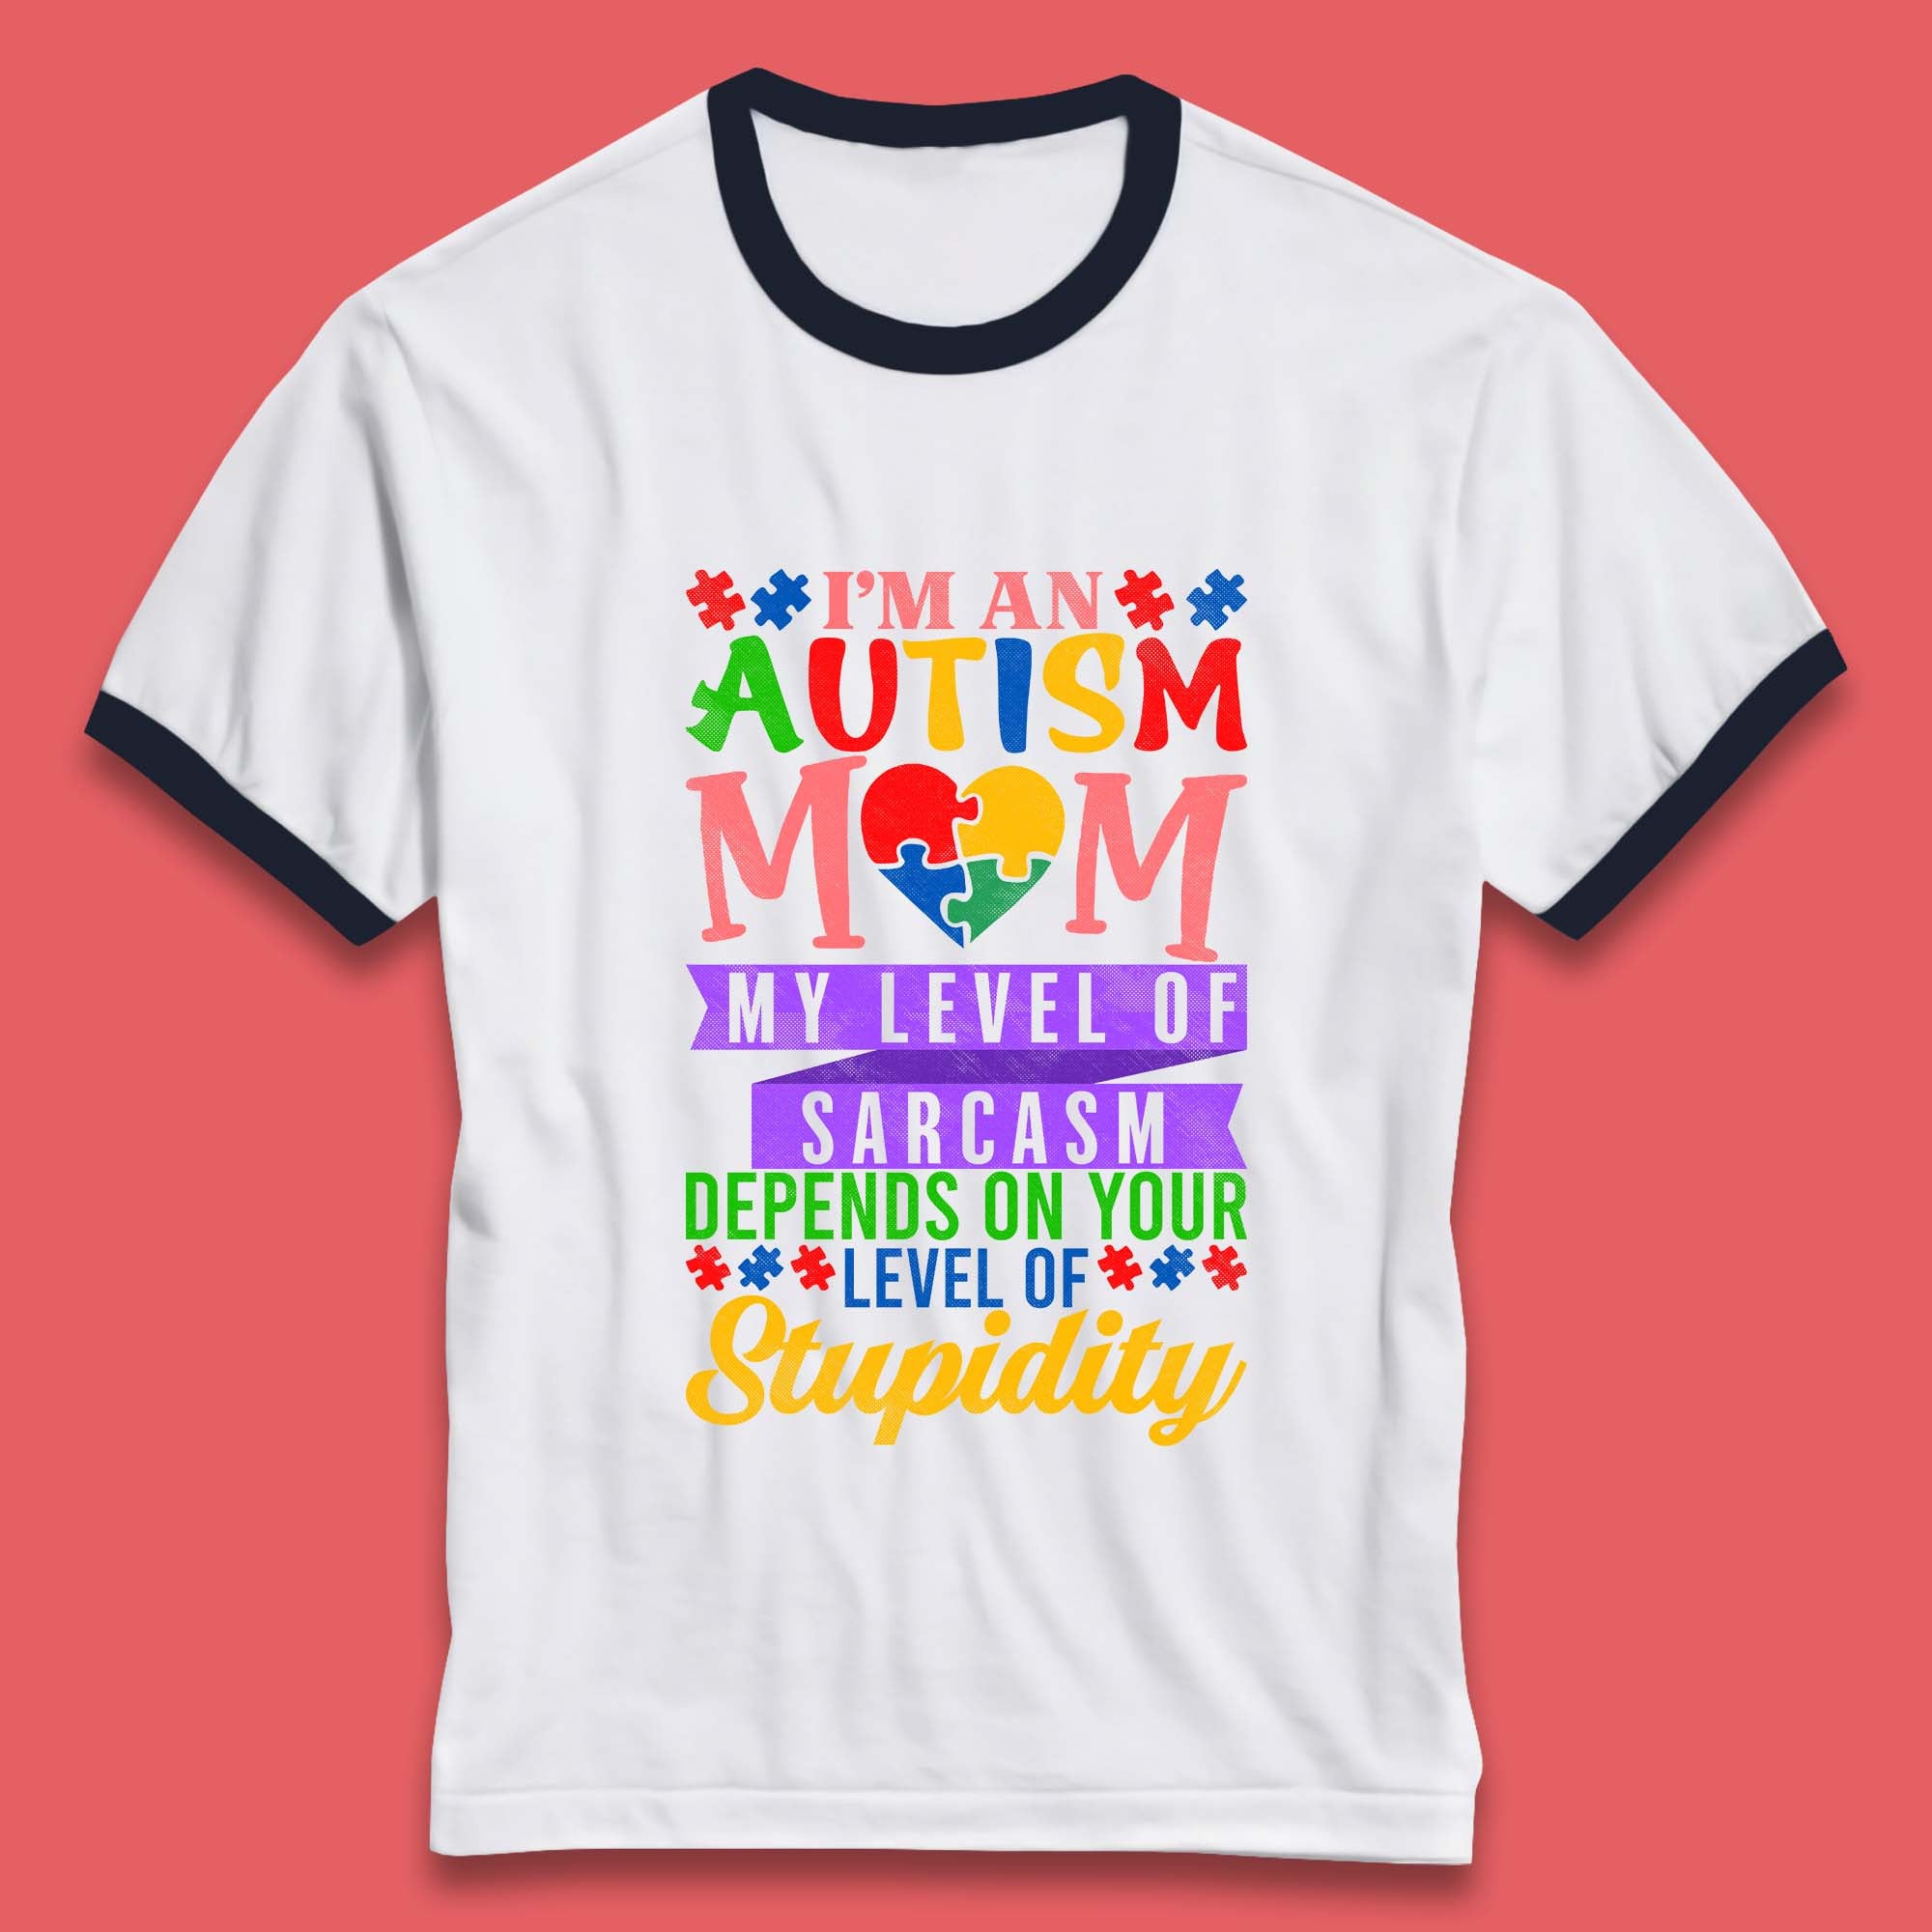 Autism Mom Humor Ringer T-Shirt